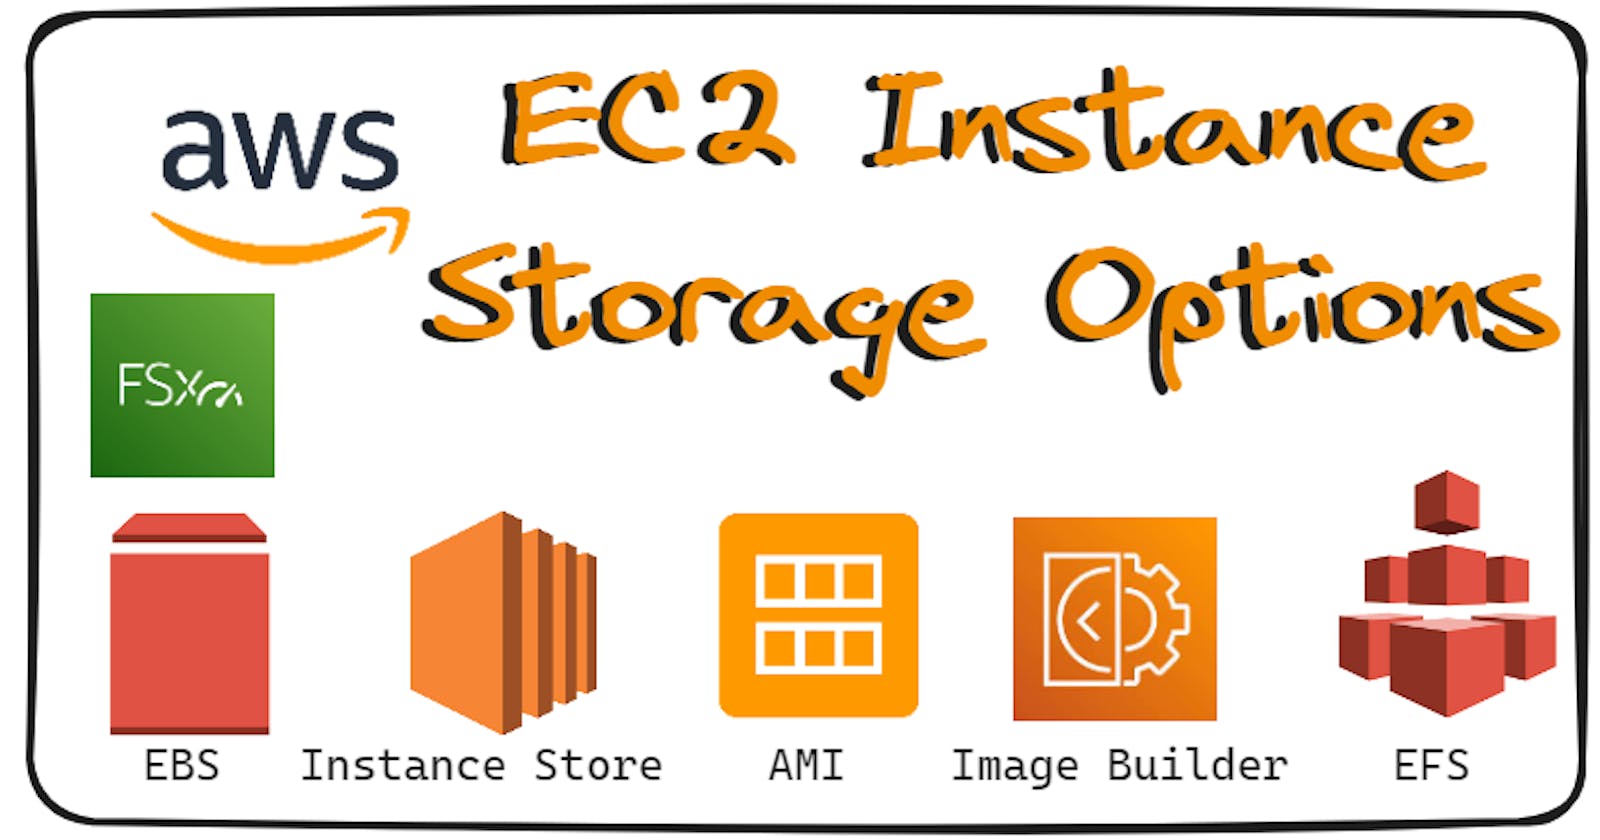 AWS EC2 Instance Storage Options